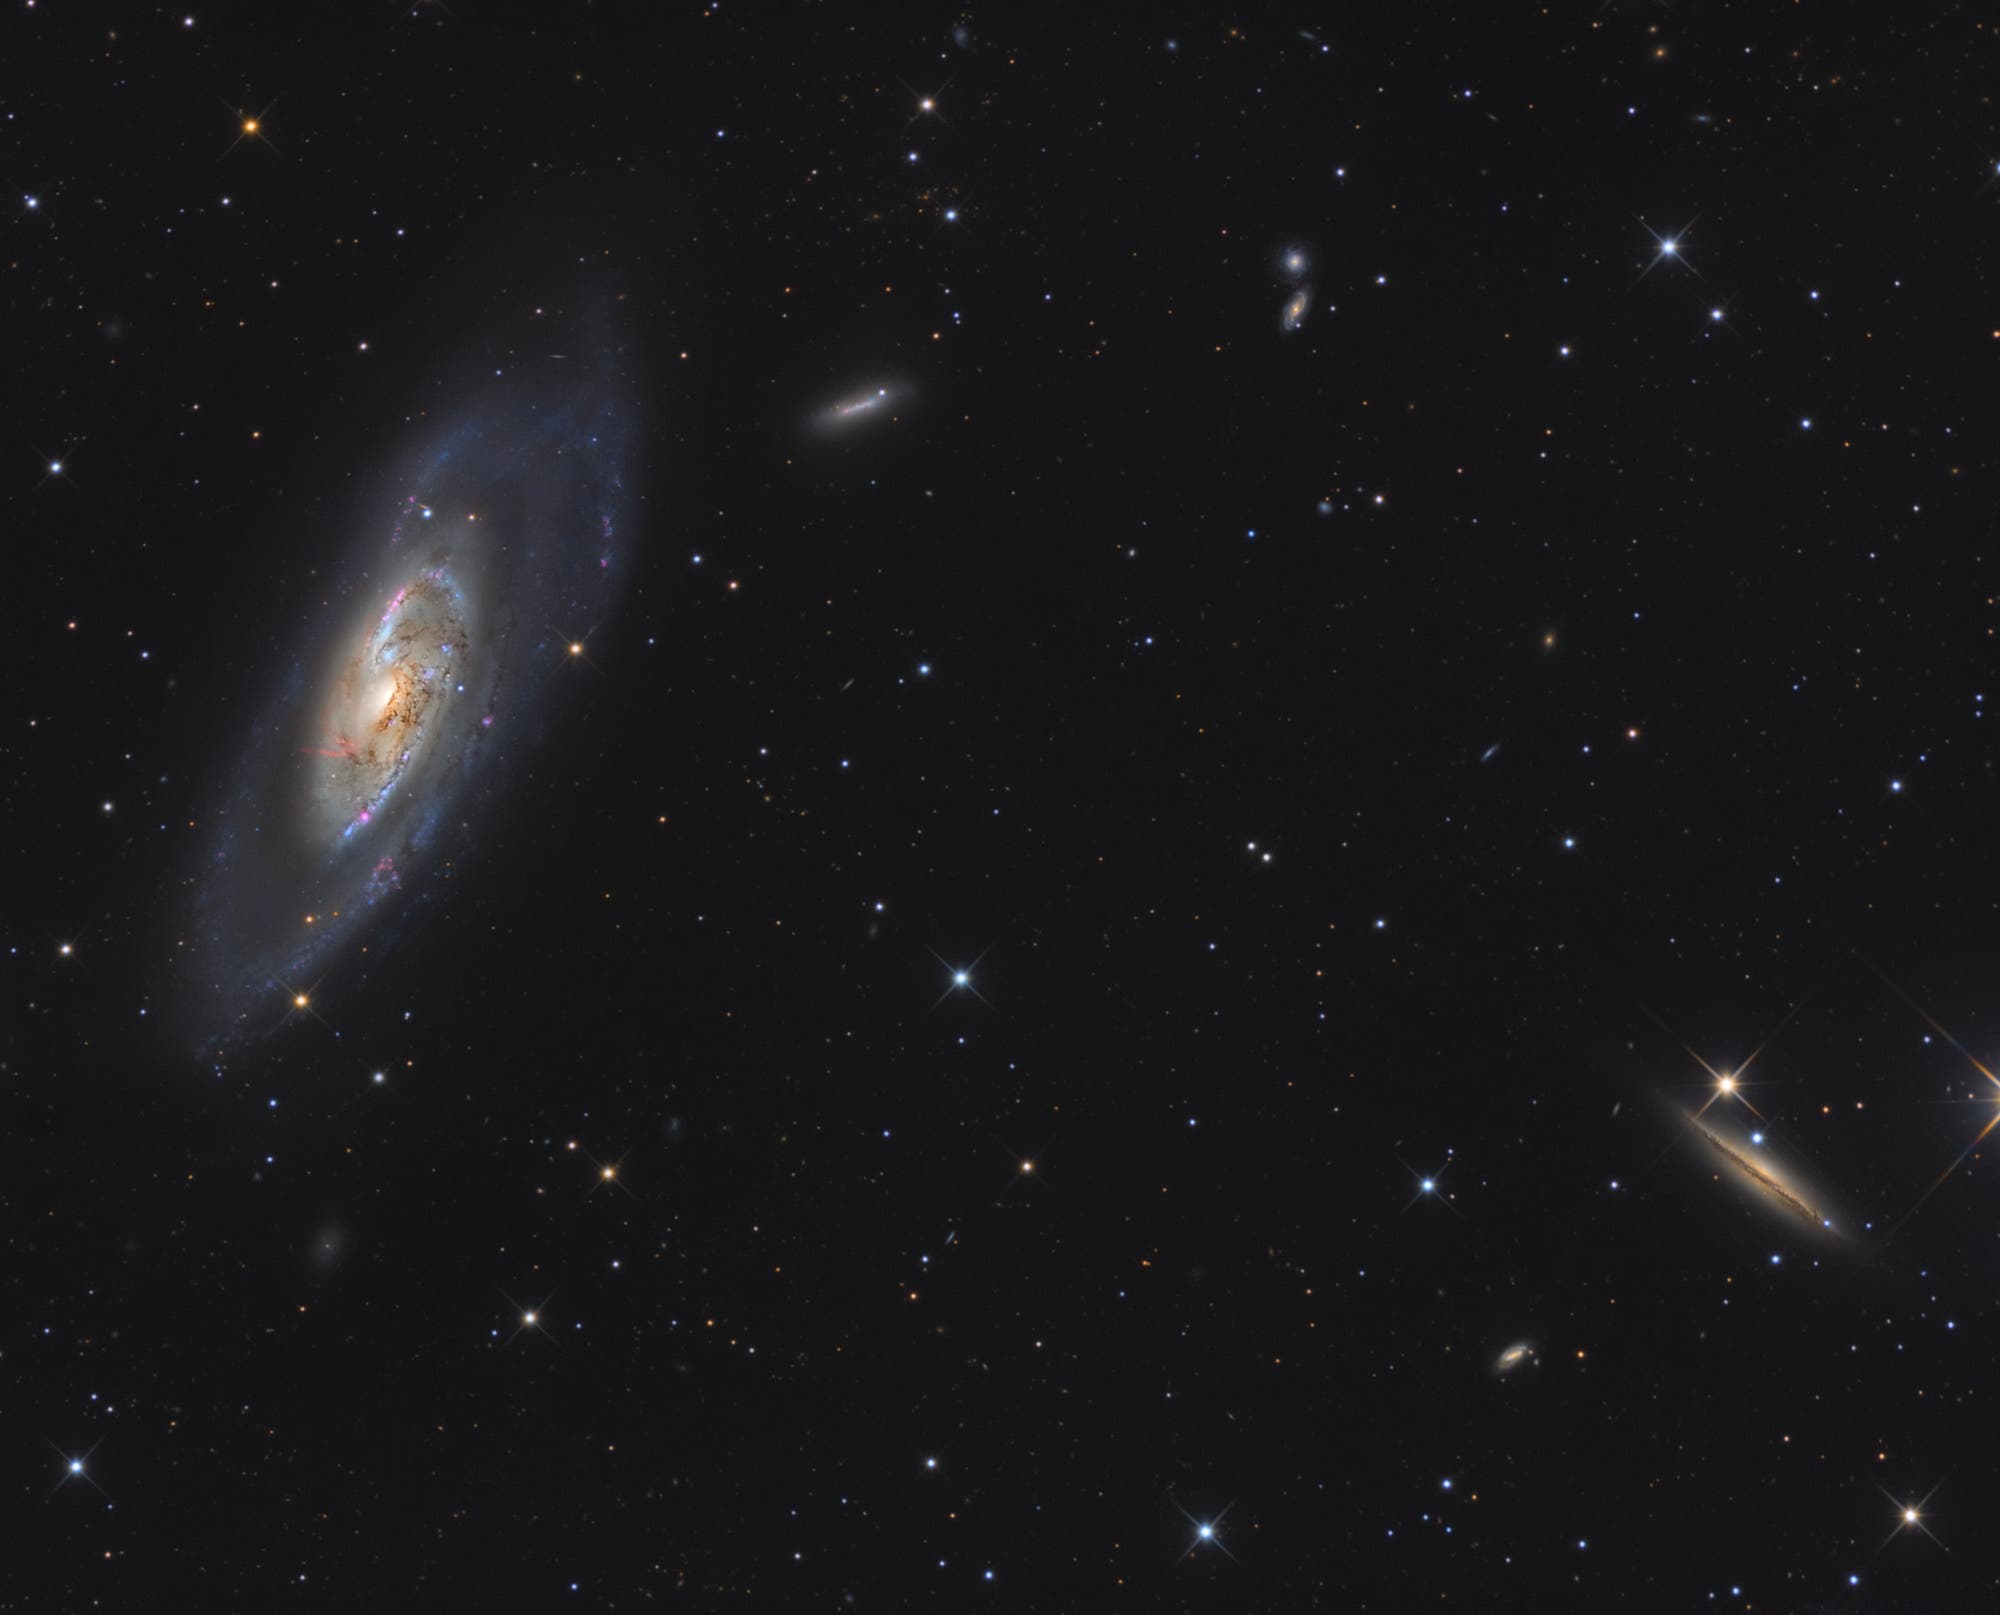 M 106 und NGC 4217 im Sternbild Jagdhunde